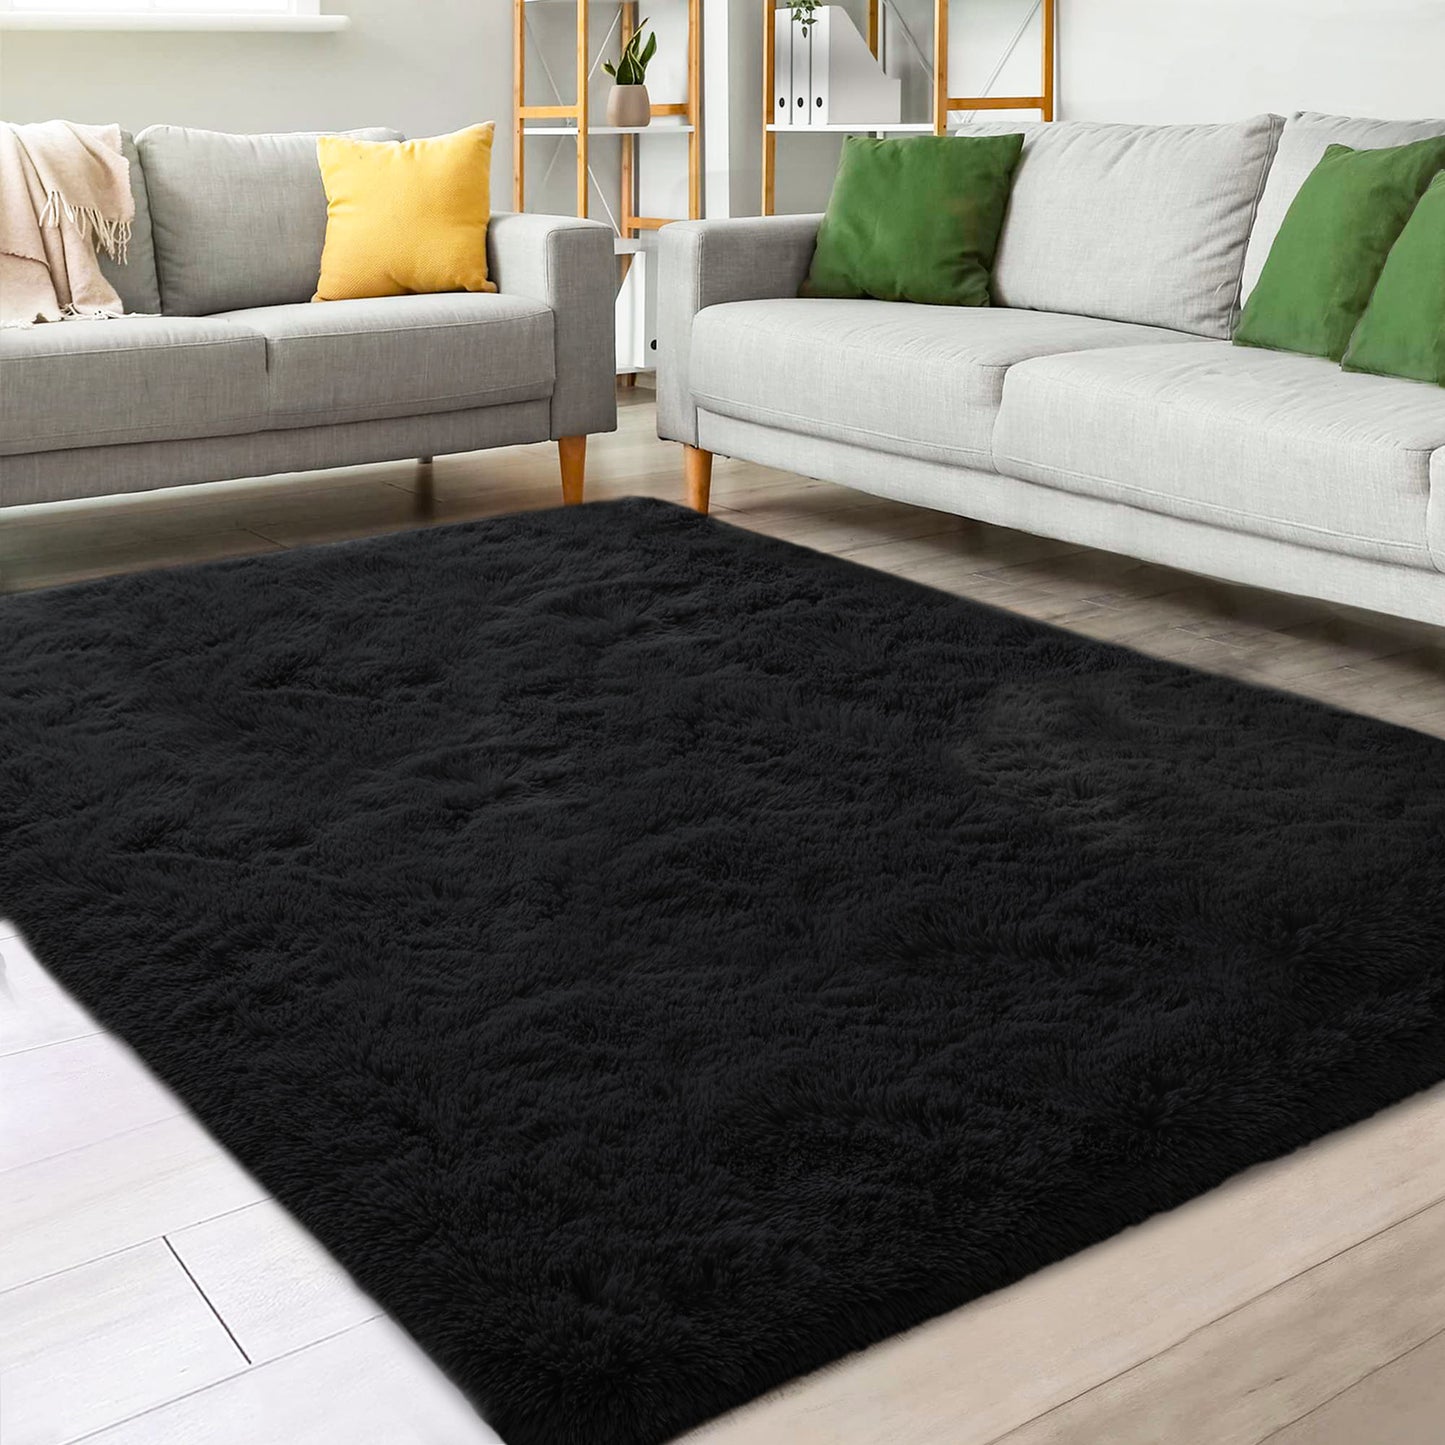 Nefoso Shag Light Gray Area Rug, Soft Fluffy Area Rugs for Living Room Bedroom Kids Room Decor Carpet